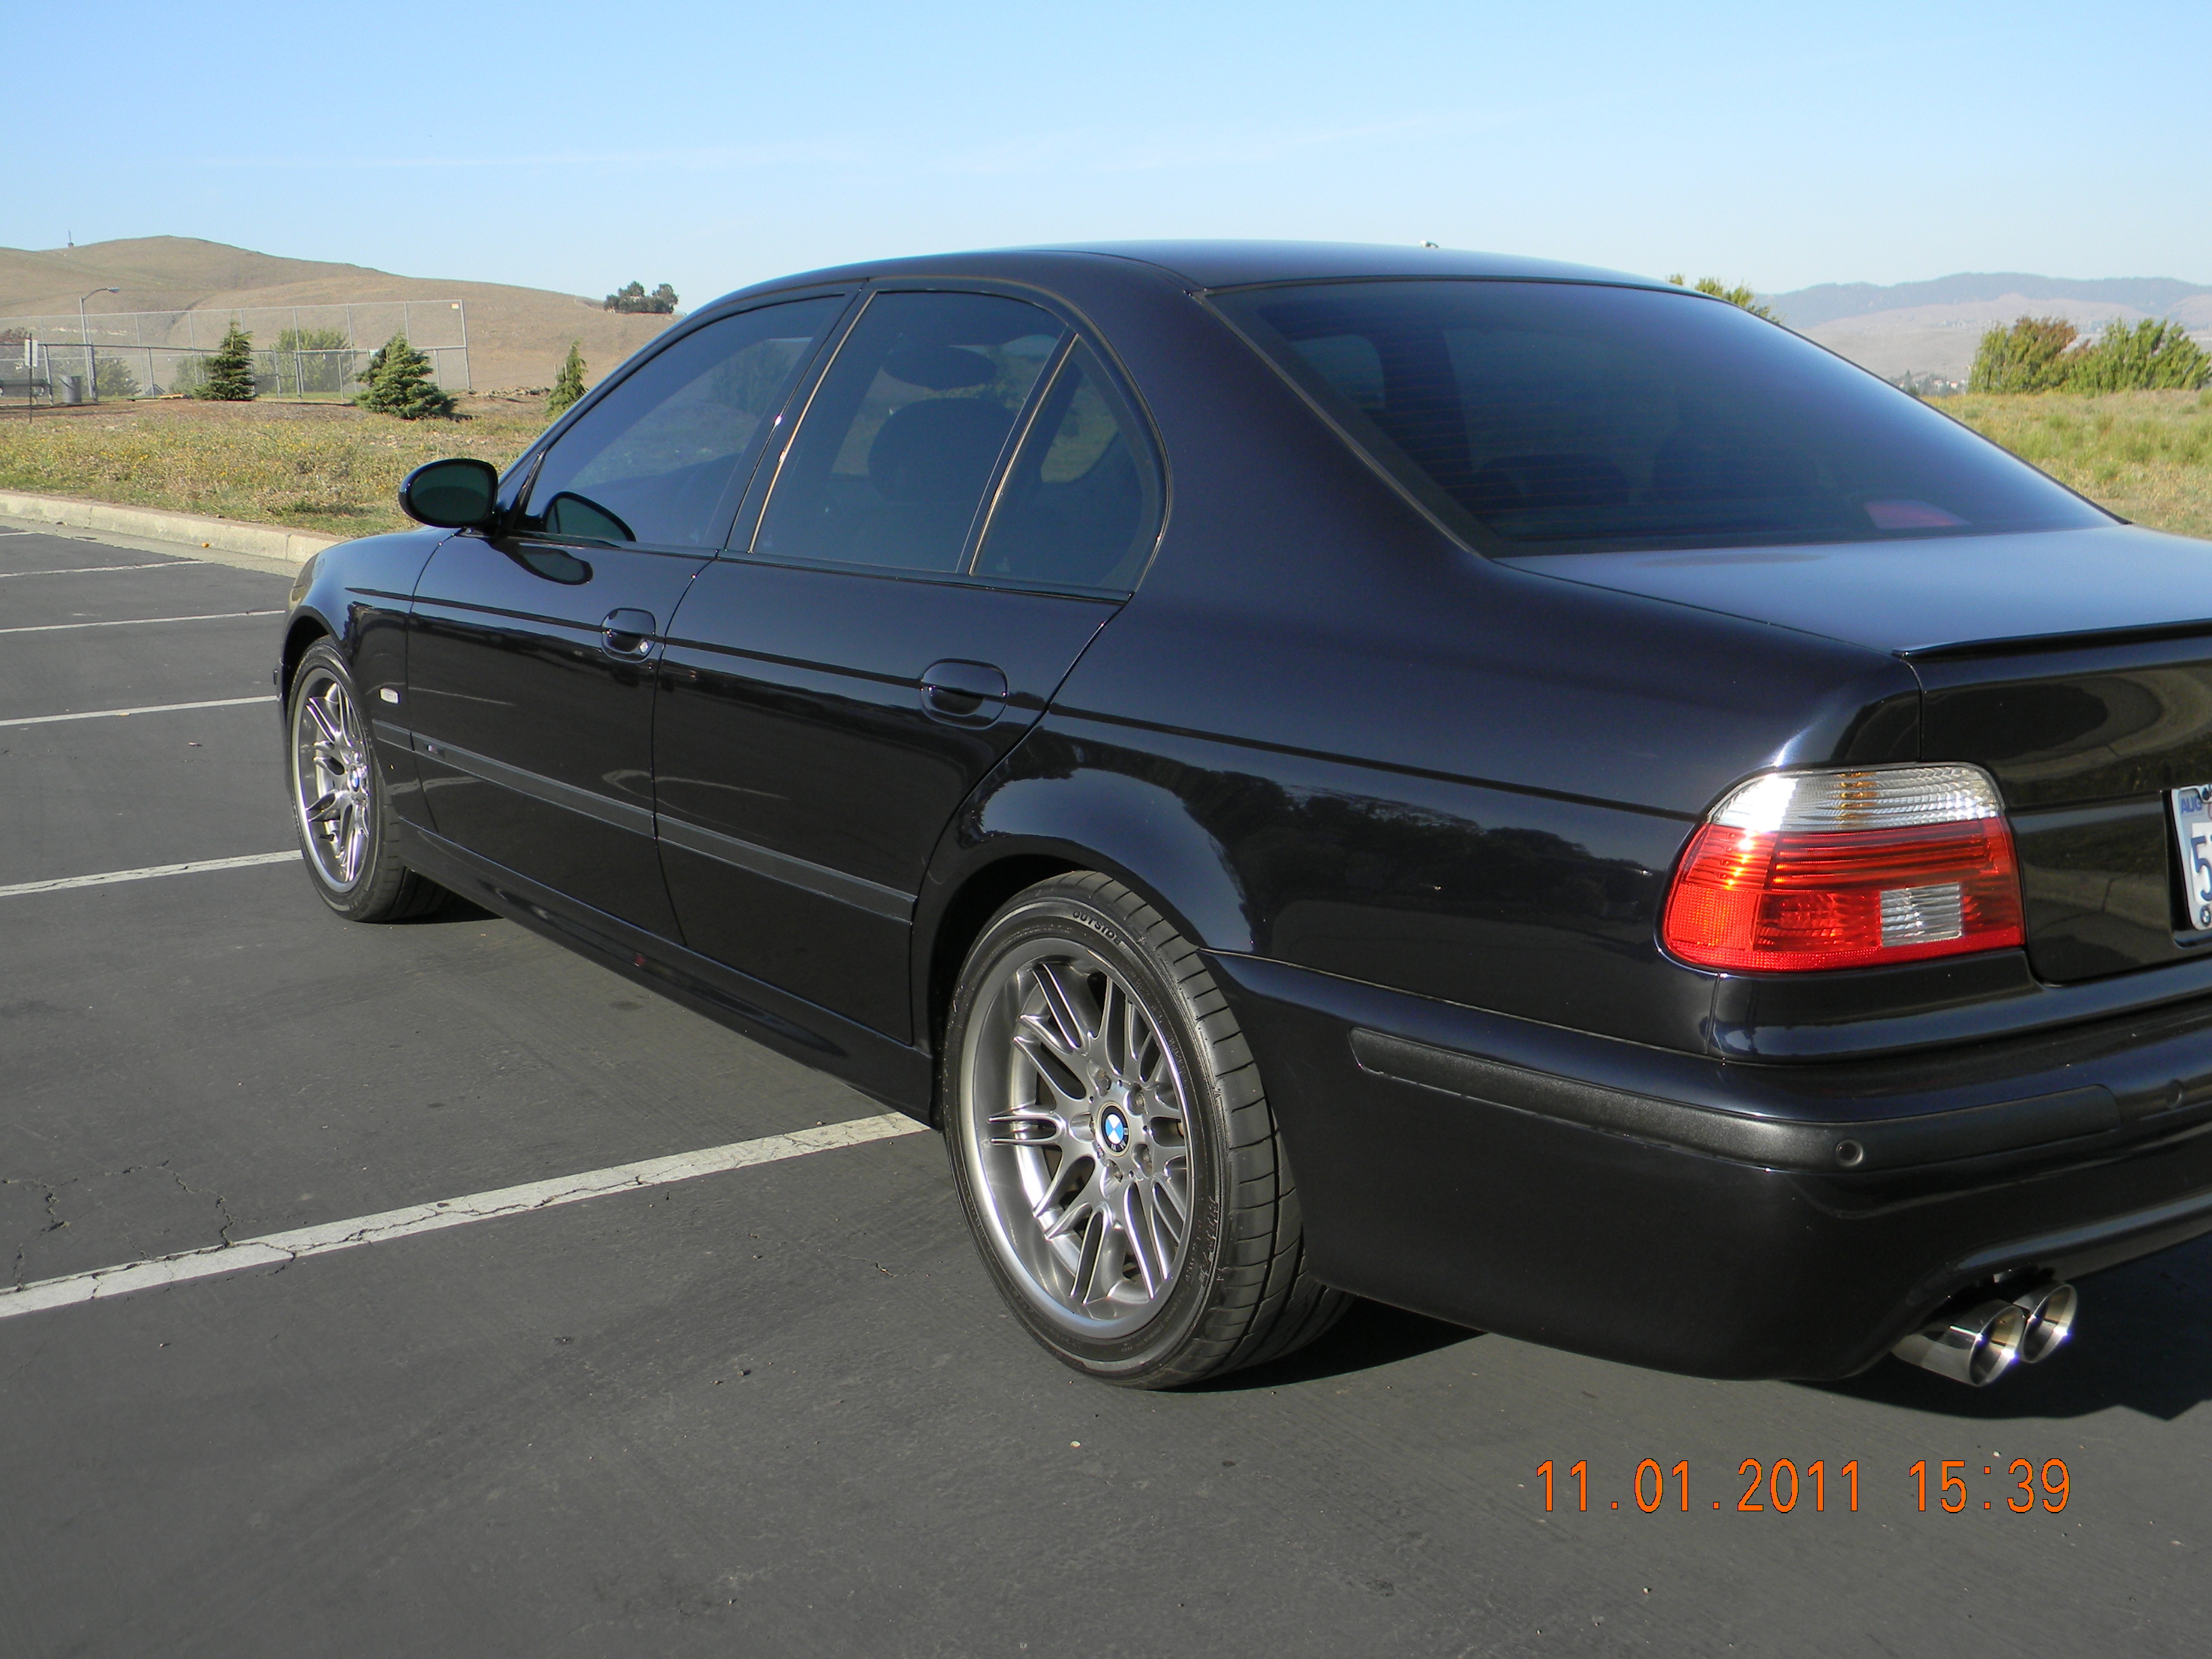 2002 BMW M5 - Carbon Black/Black - 6MT - 105k Miles - 100% Stock